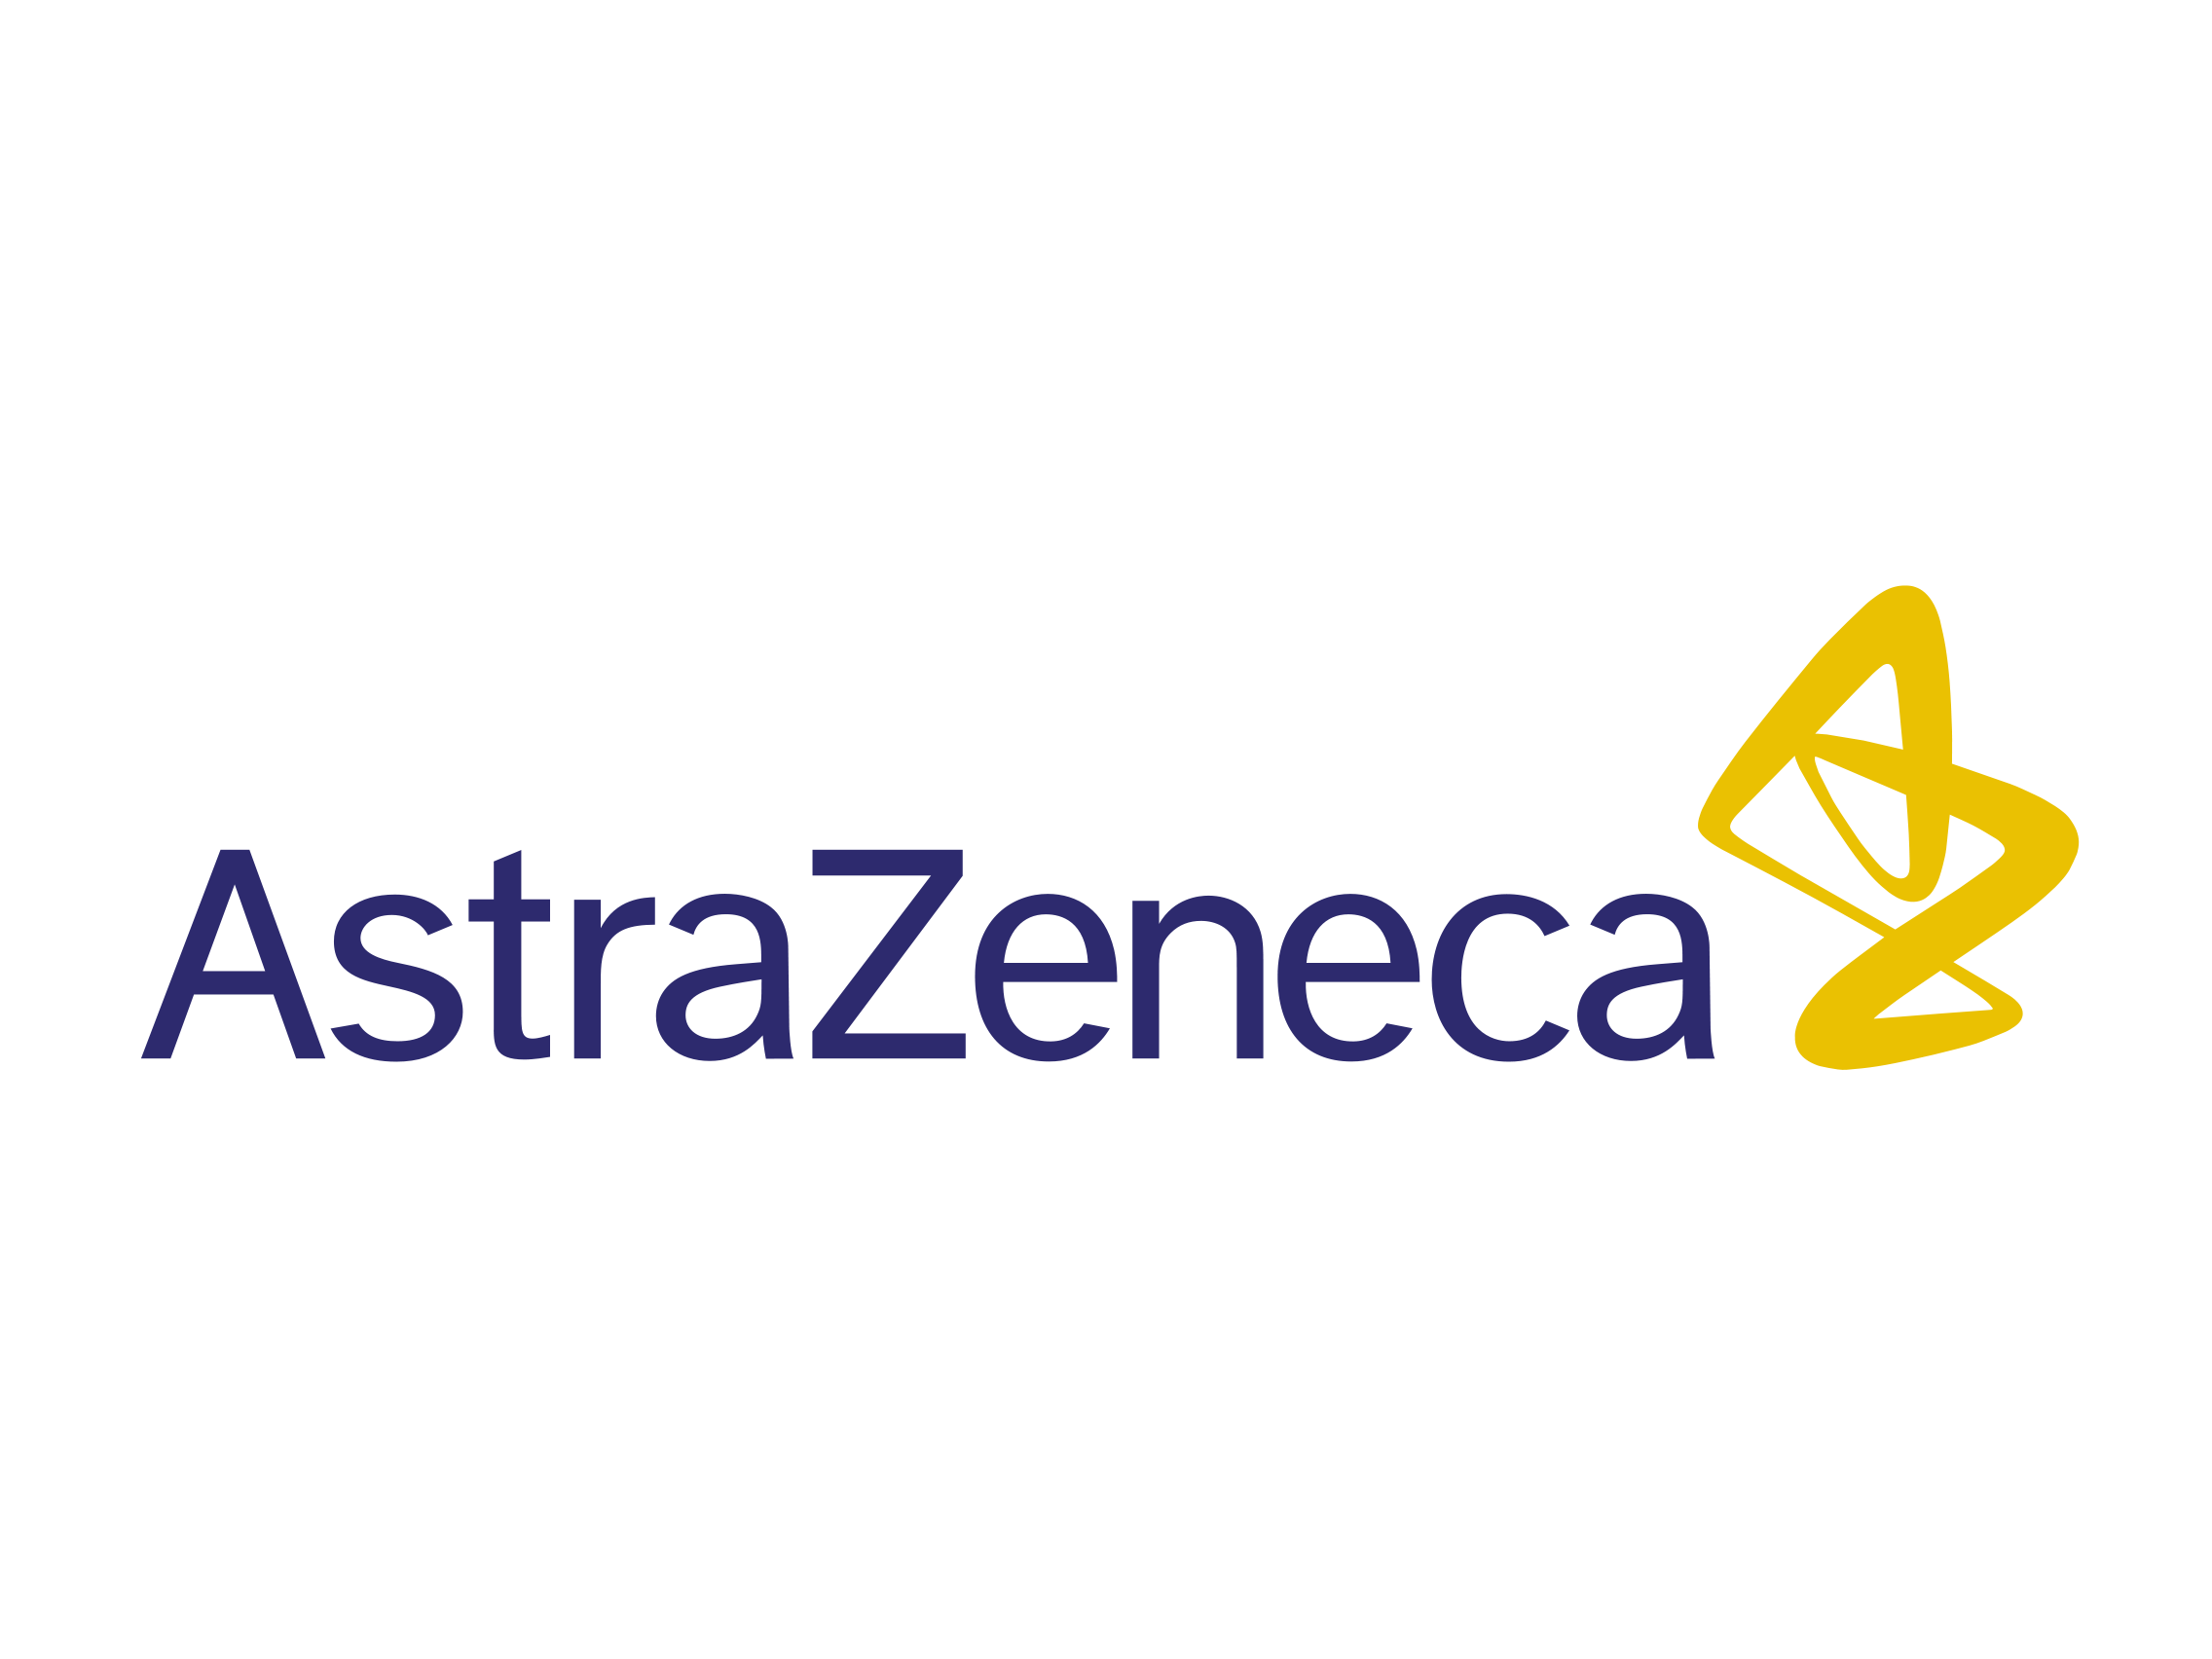 Astrazeneca Logo Matthew Whiteford 2017 06 27T15:20:19 00:00 - Astrazeneca, Transparent background PNG HD thumbnail